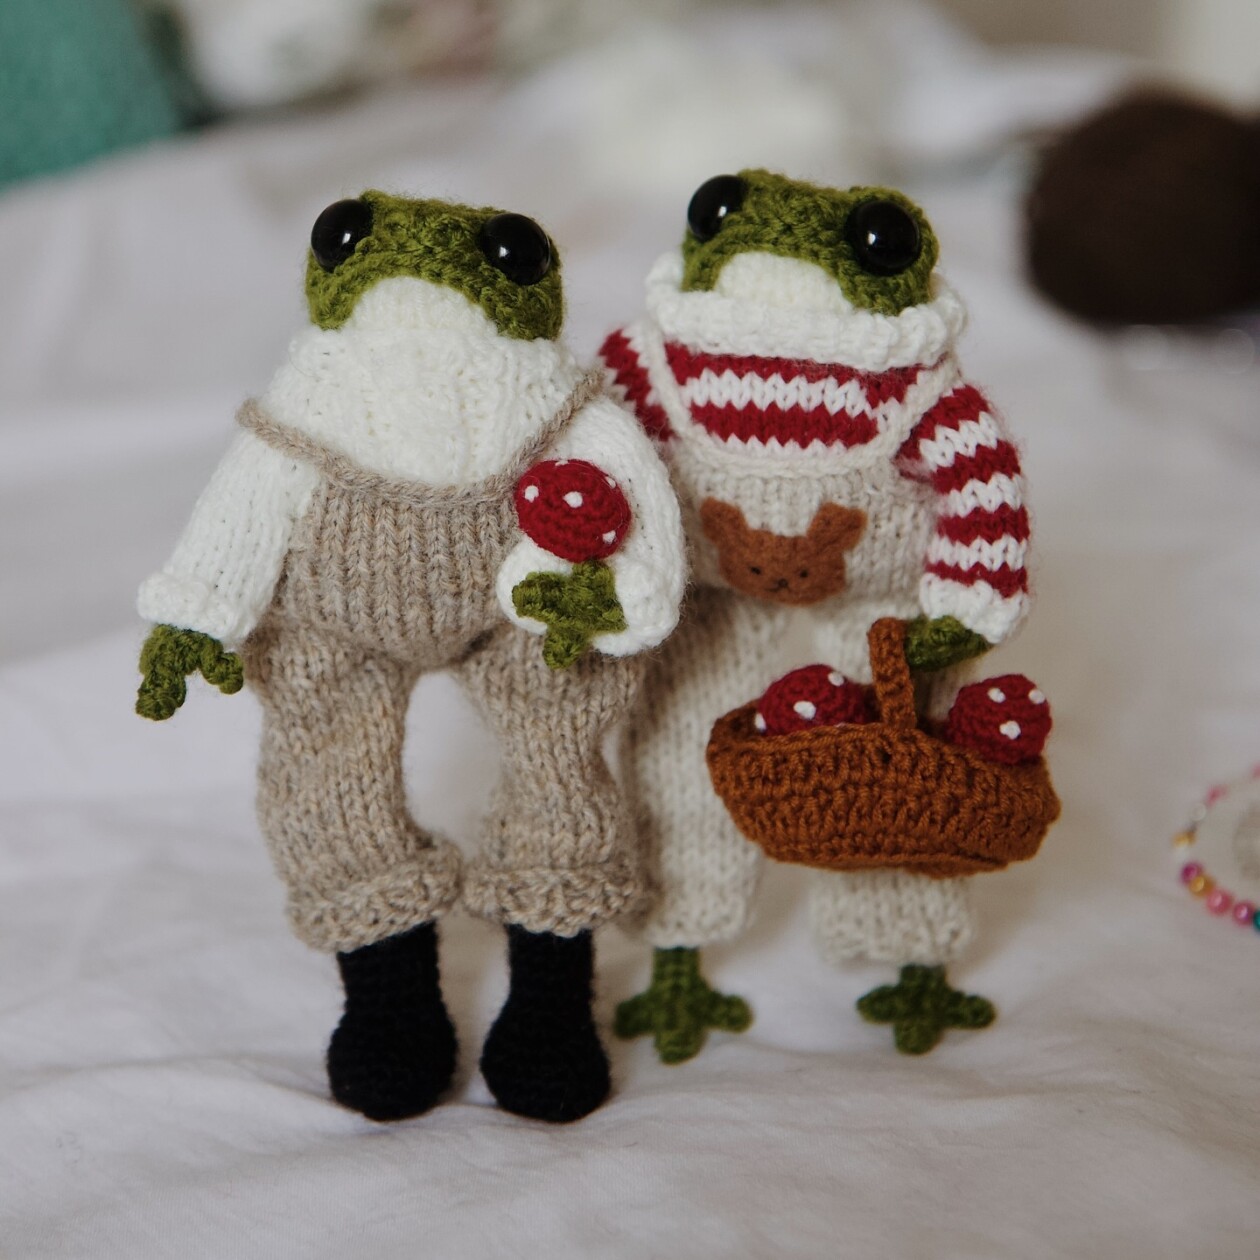 Enchanting Anthropomorphized Frog Crochet Patterns By Elliot (13)